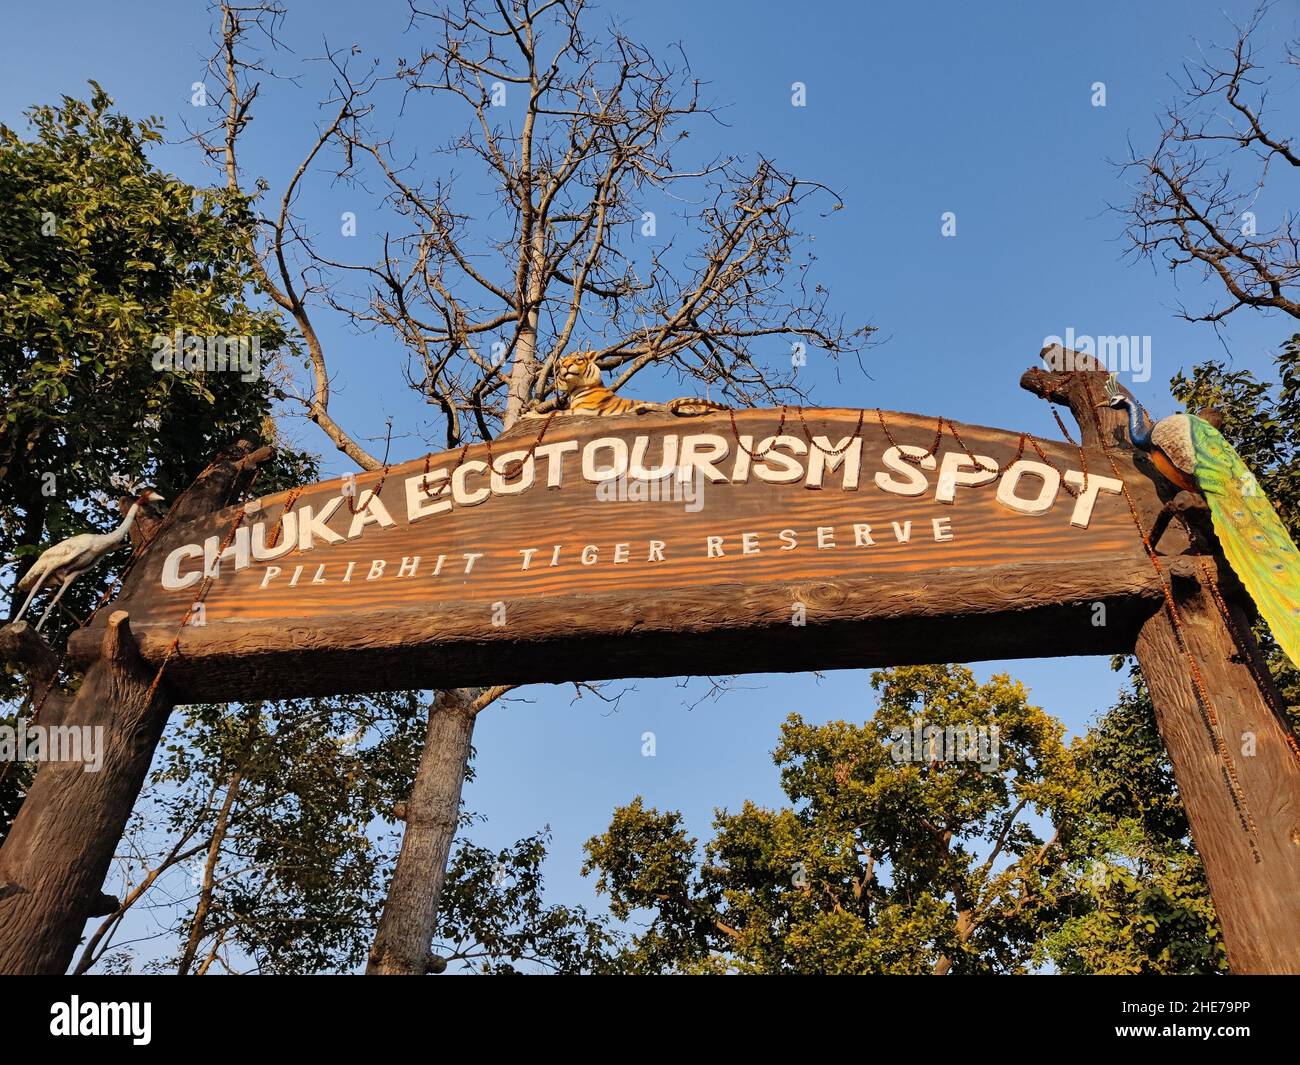 Chuka Ecotourism Spot in Pilibhit Tiger Reserve, Uttar Pradesh, India Stock Photo